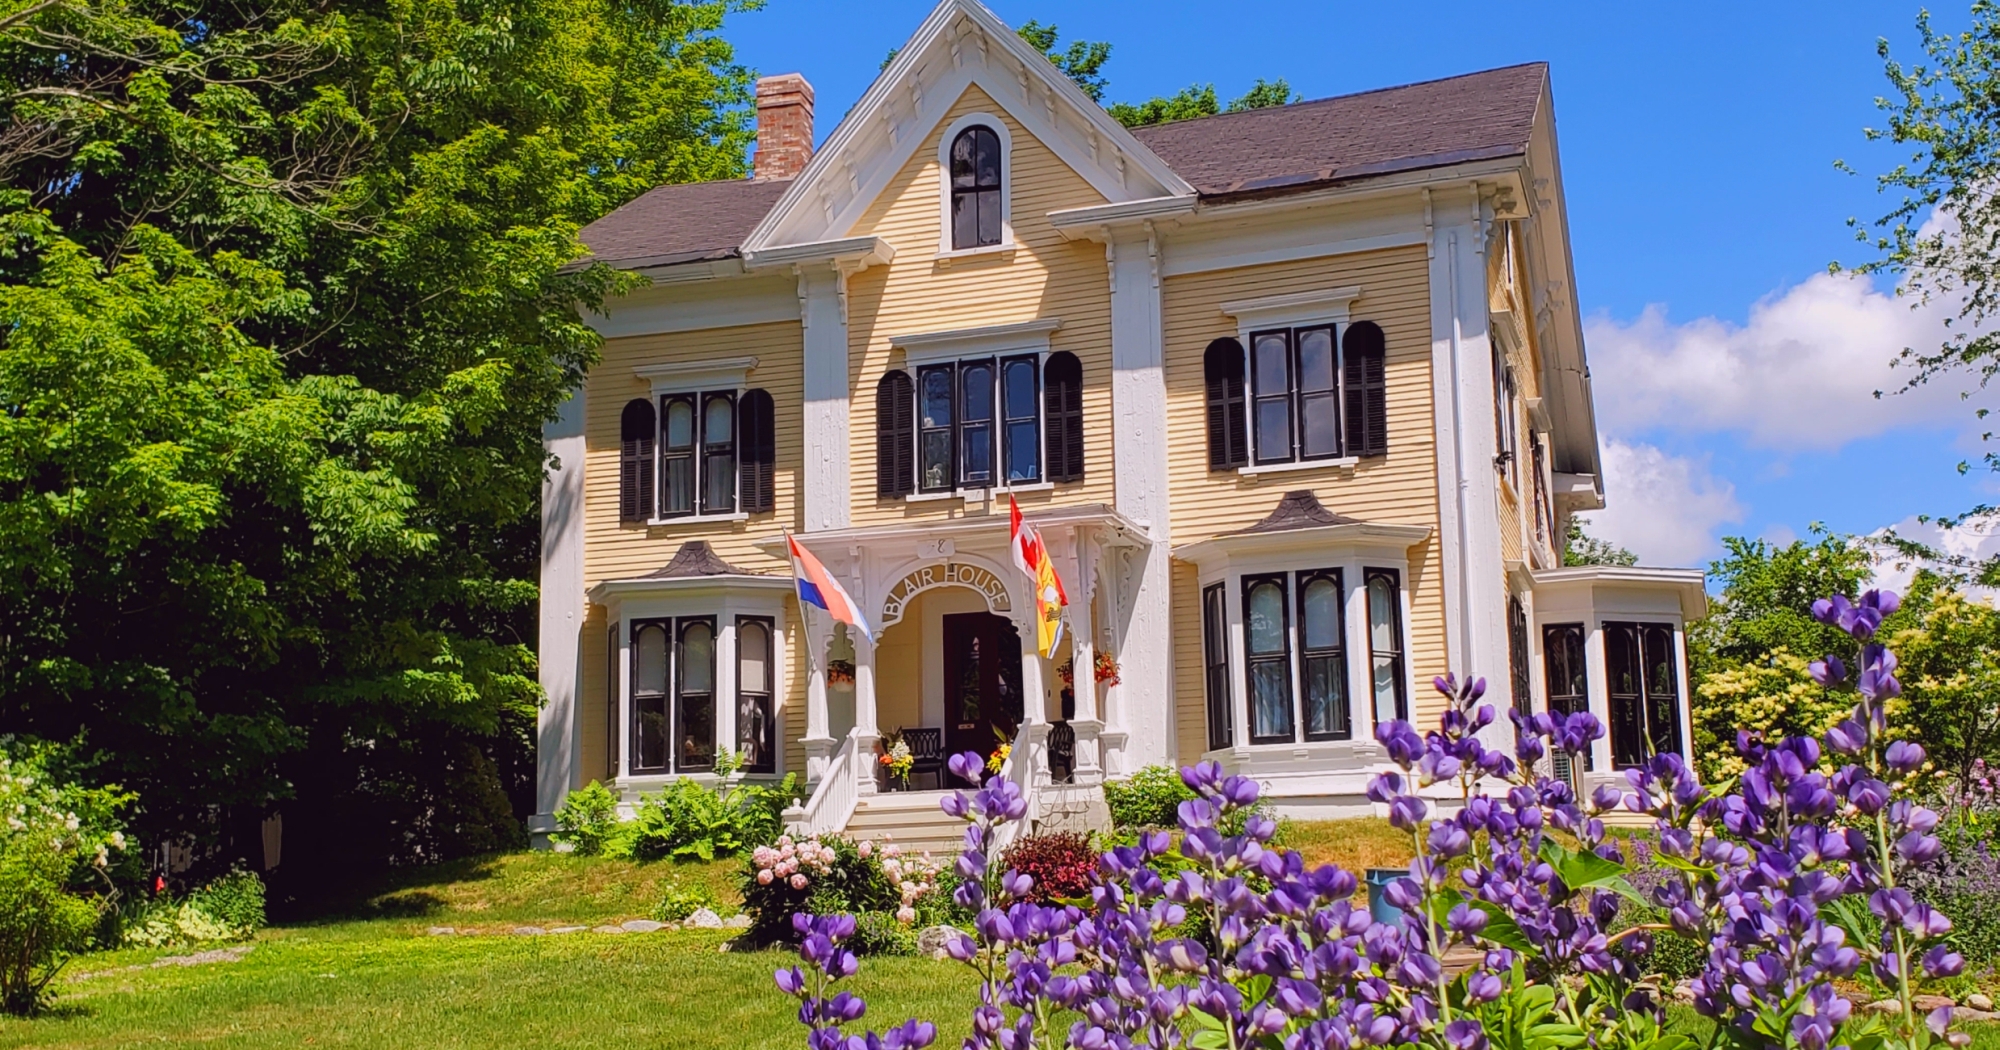 Blair House Heritage Inn / #CanadaDo / New Brunswick Accommodations / Explore New Brunswick